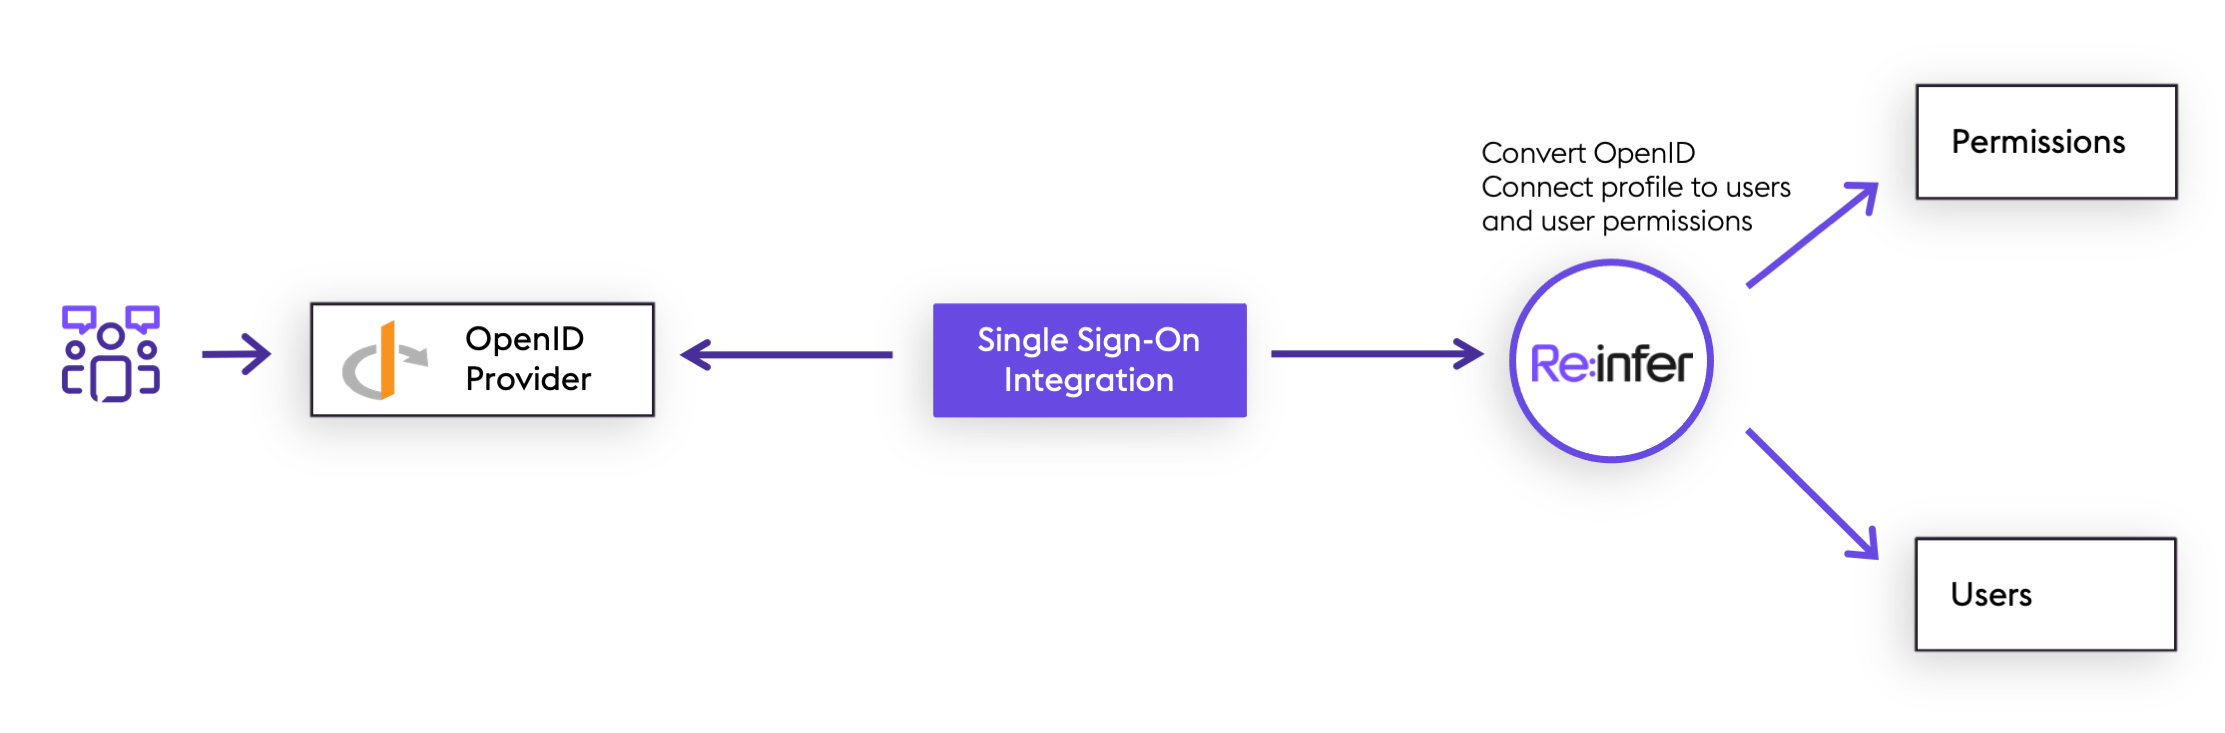 Single Sign-On Integration